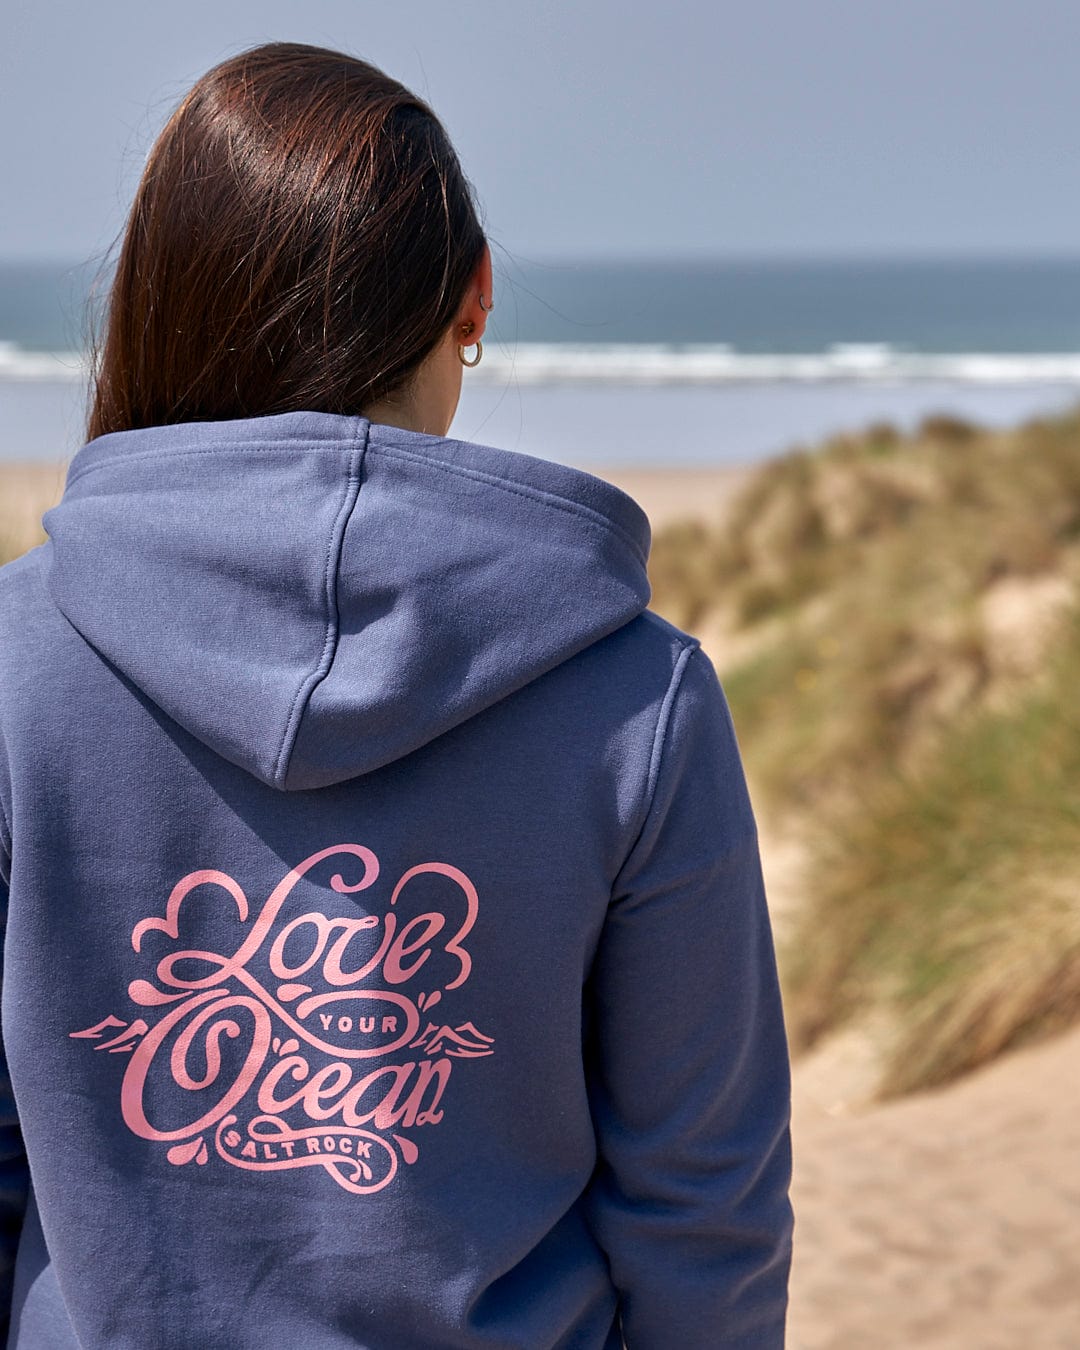 A woman wearing a Saltrock Love Your Ocean - Womens Zip Hood - Dark Blue hoodie standing on the beach.